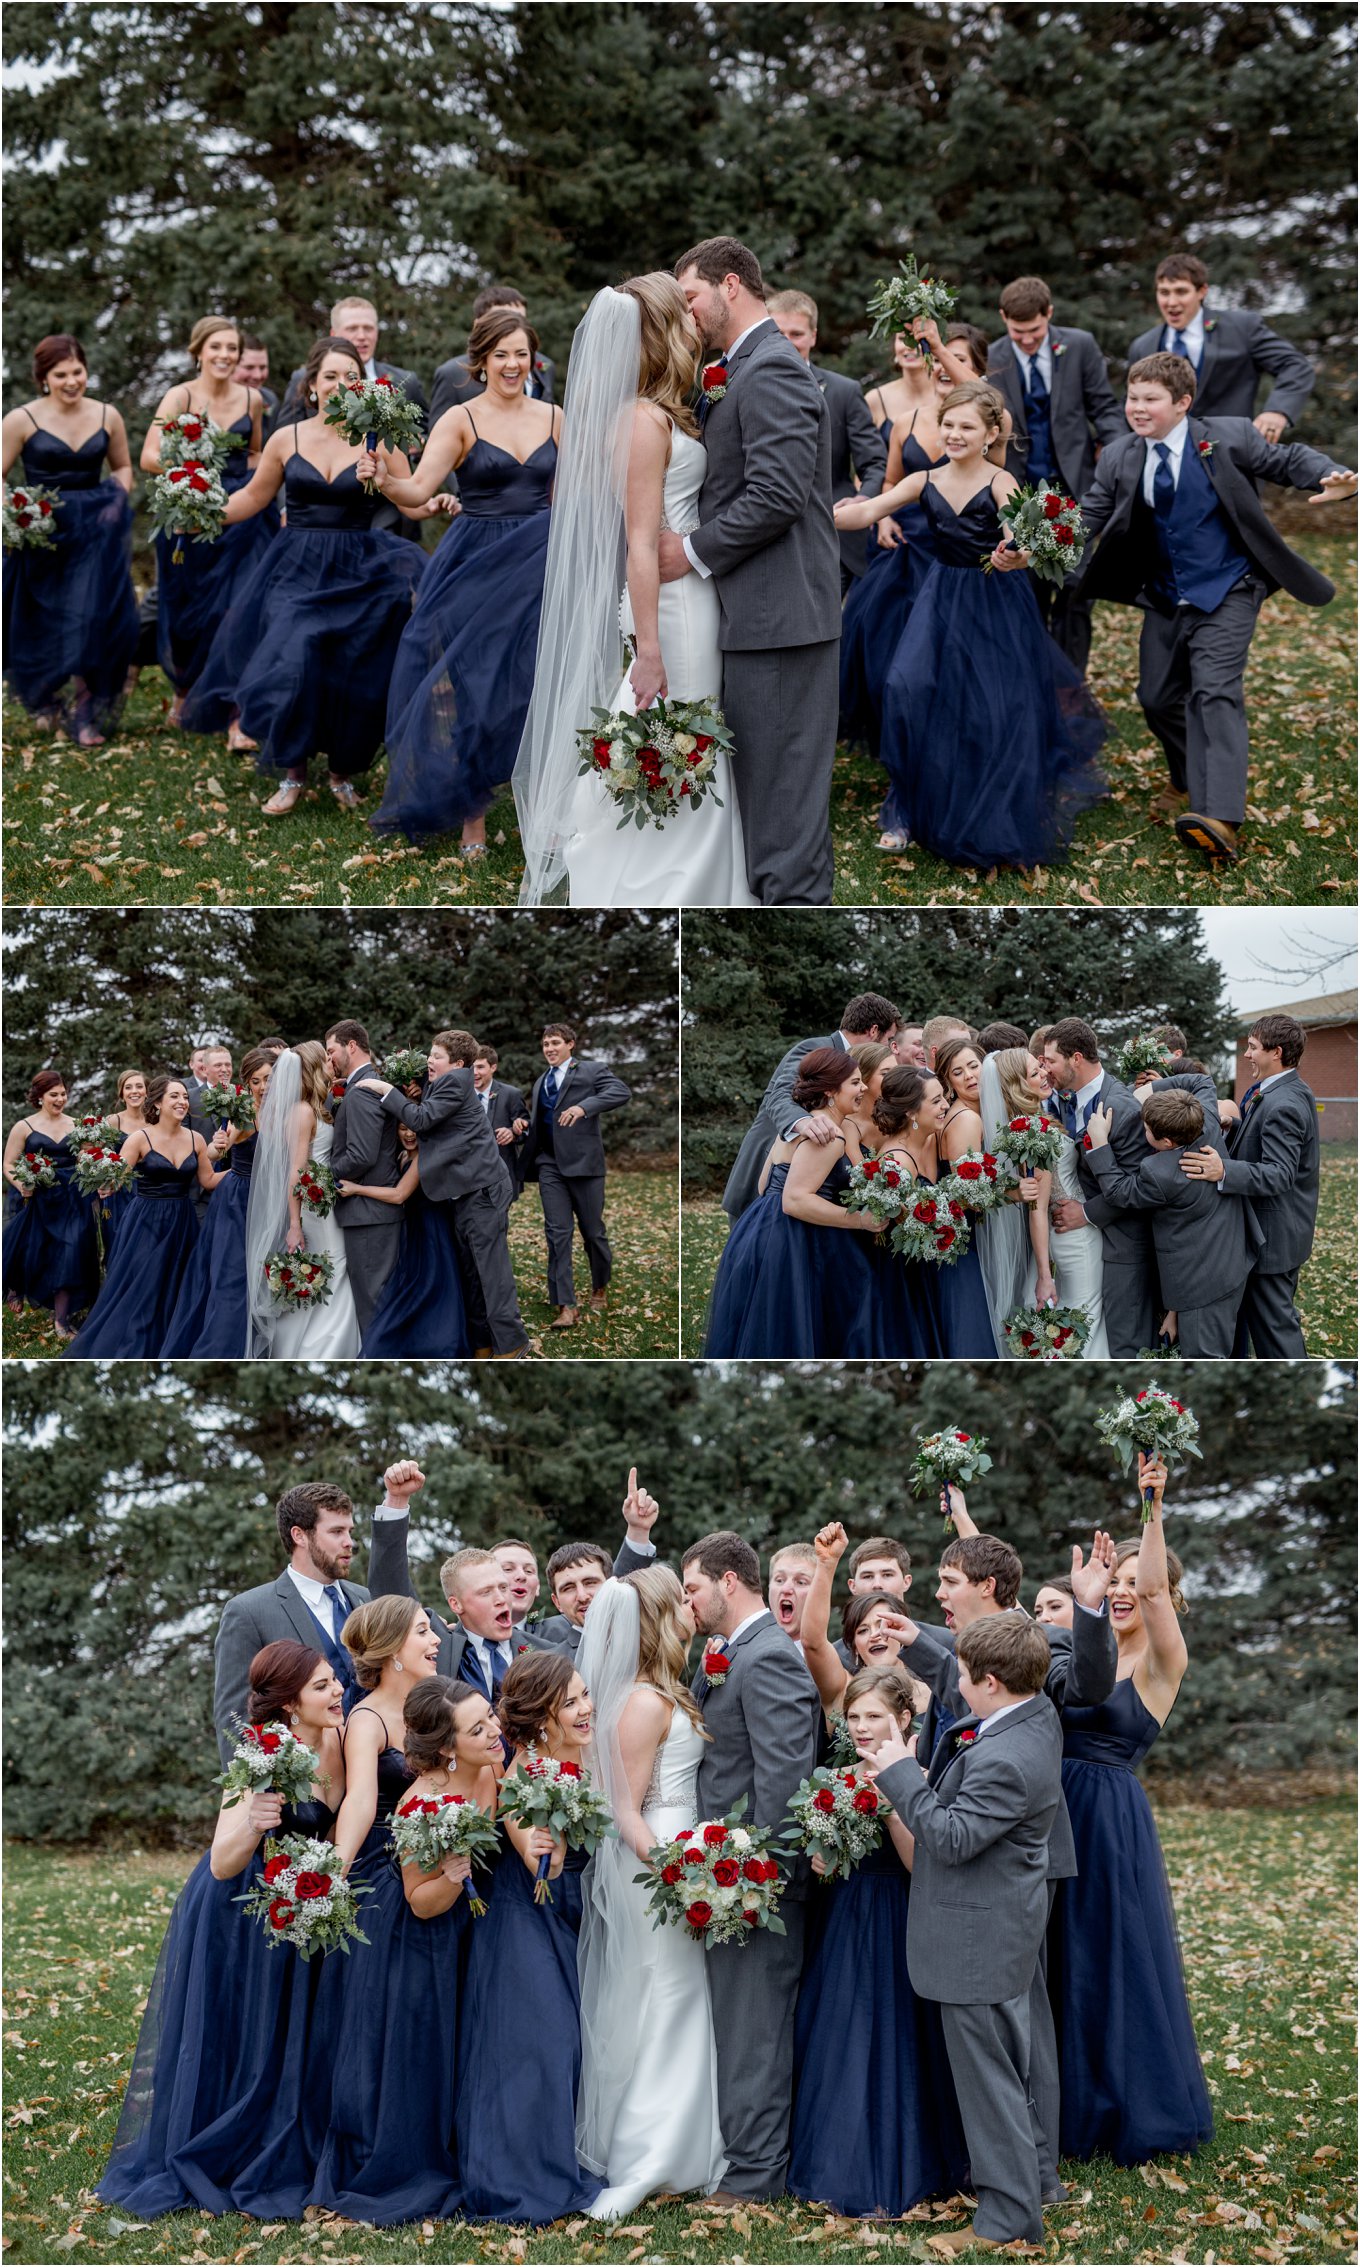 Central Nebraska Wedding by Greeley, Colorado Based Wedding Photographer